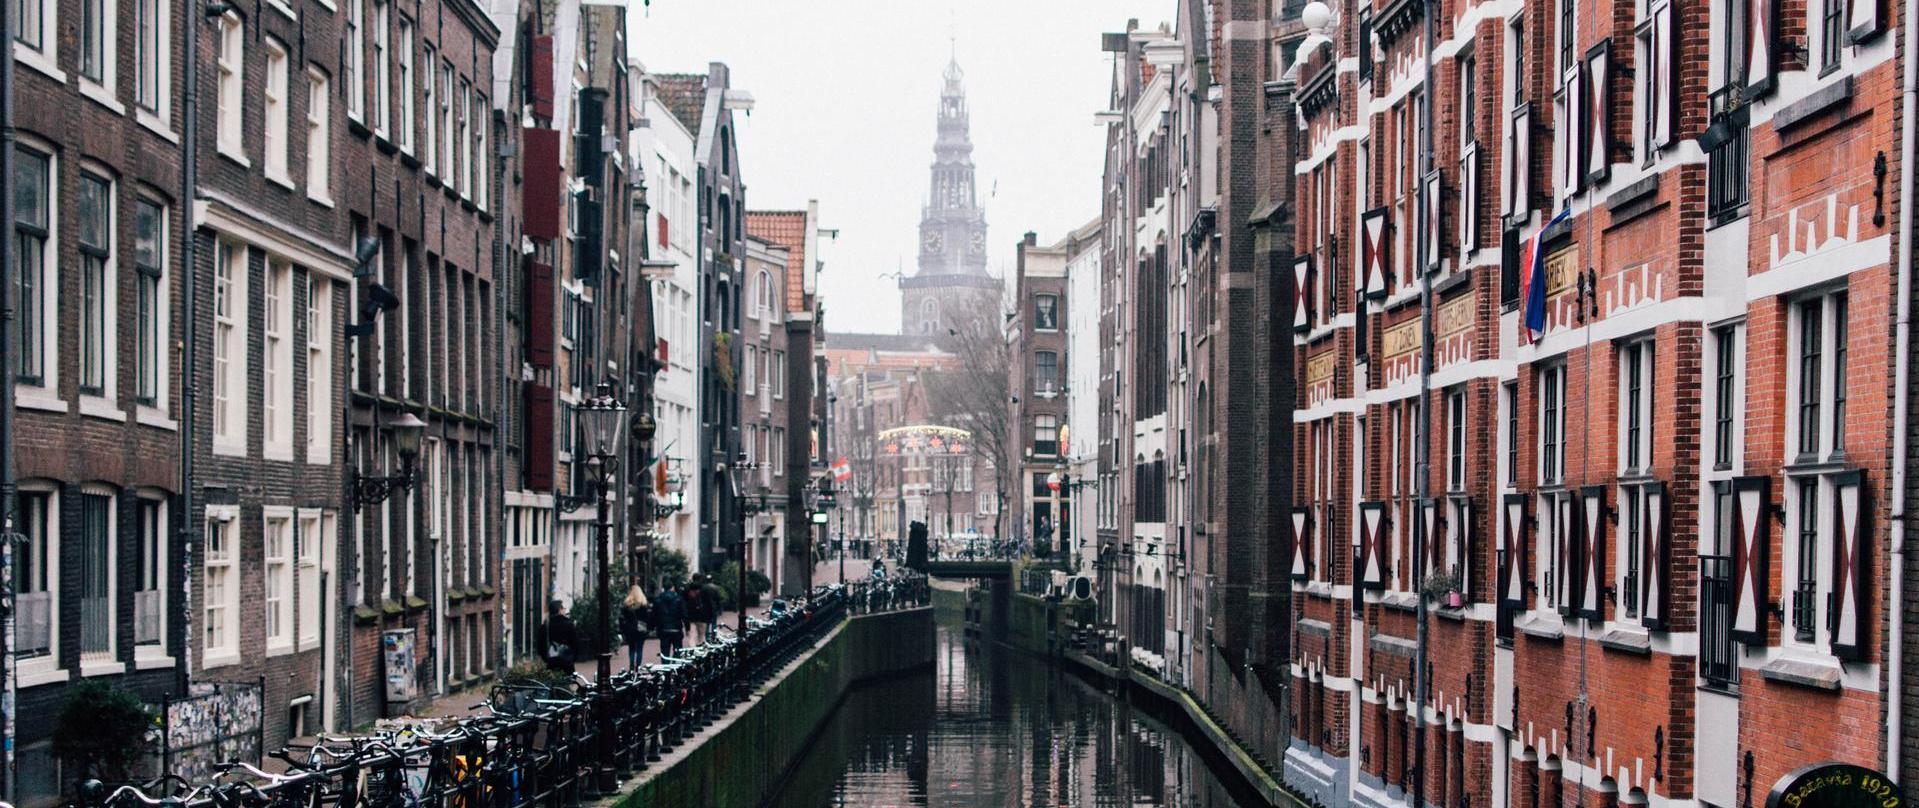  amsterdam-apartments-architecture-851039.jpg